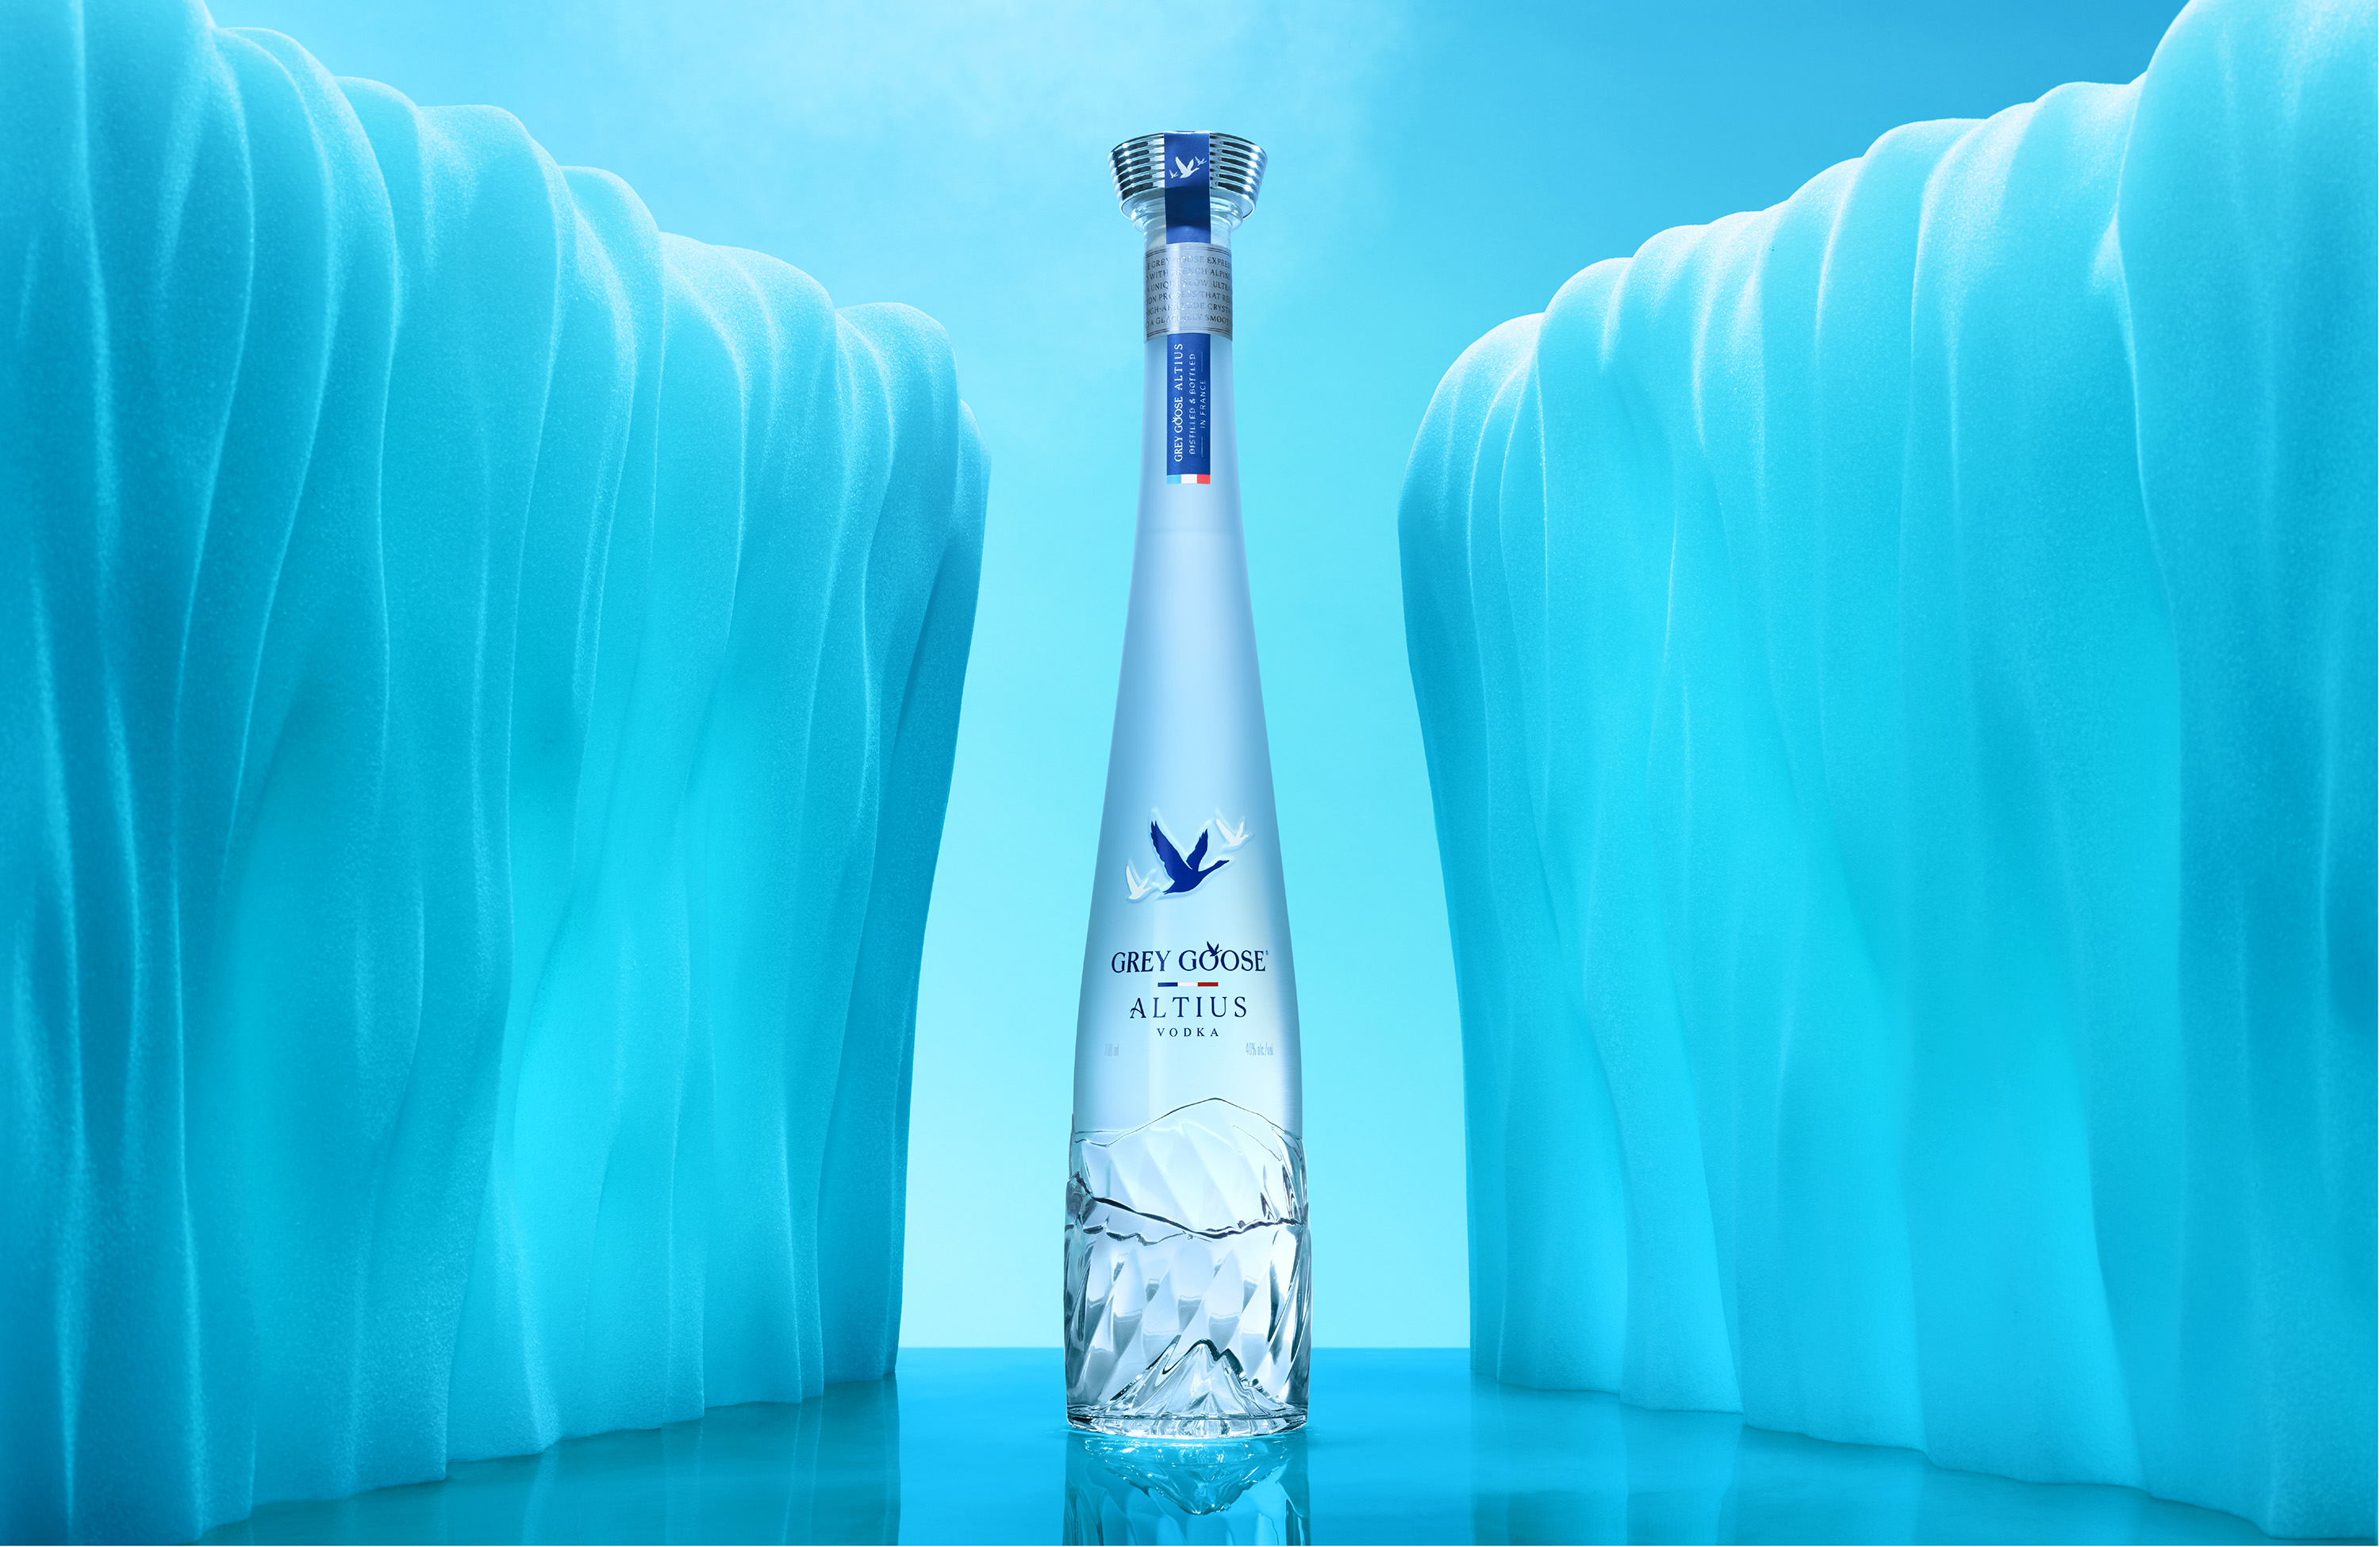 Introducing Grey Goose Altius, Aa New Vodka Designed by Intertype Studio